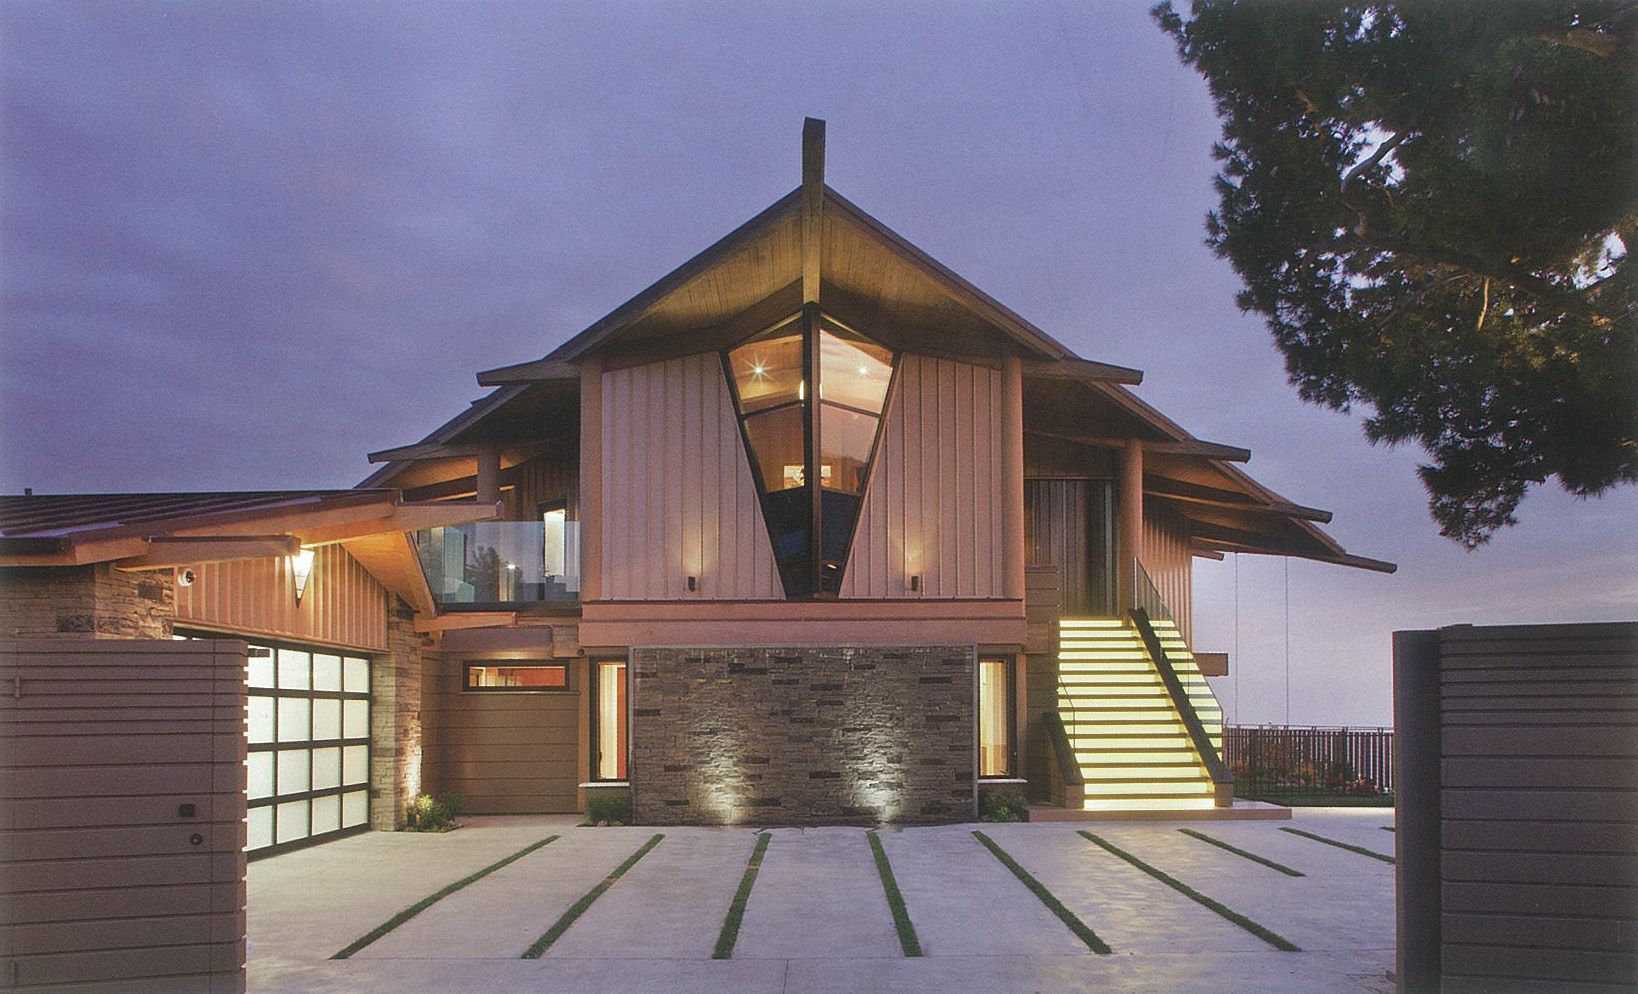 Macapa Flying Wing Home - history of modern architecture design - Dean Larkin Design